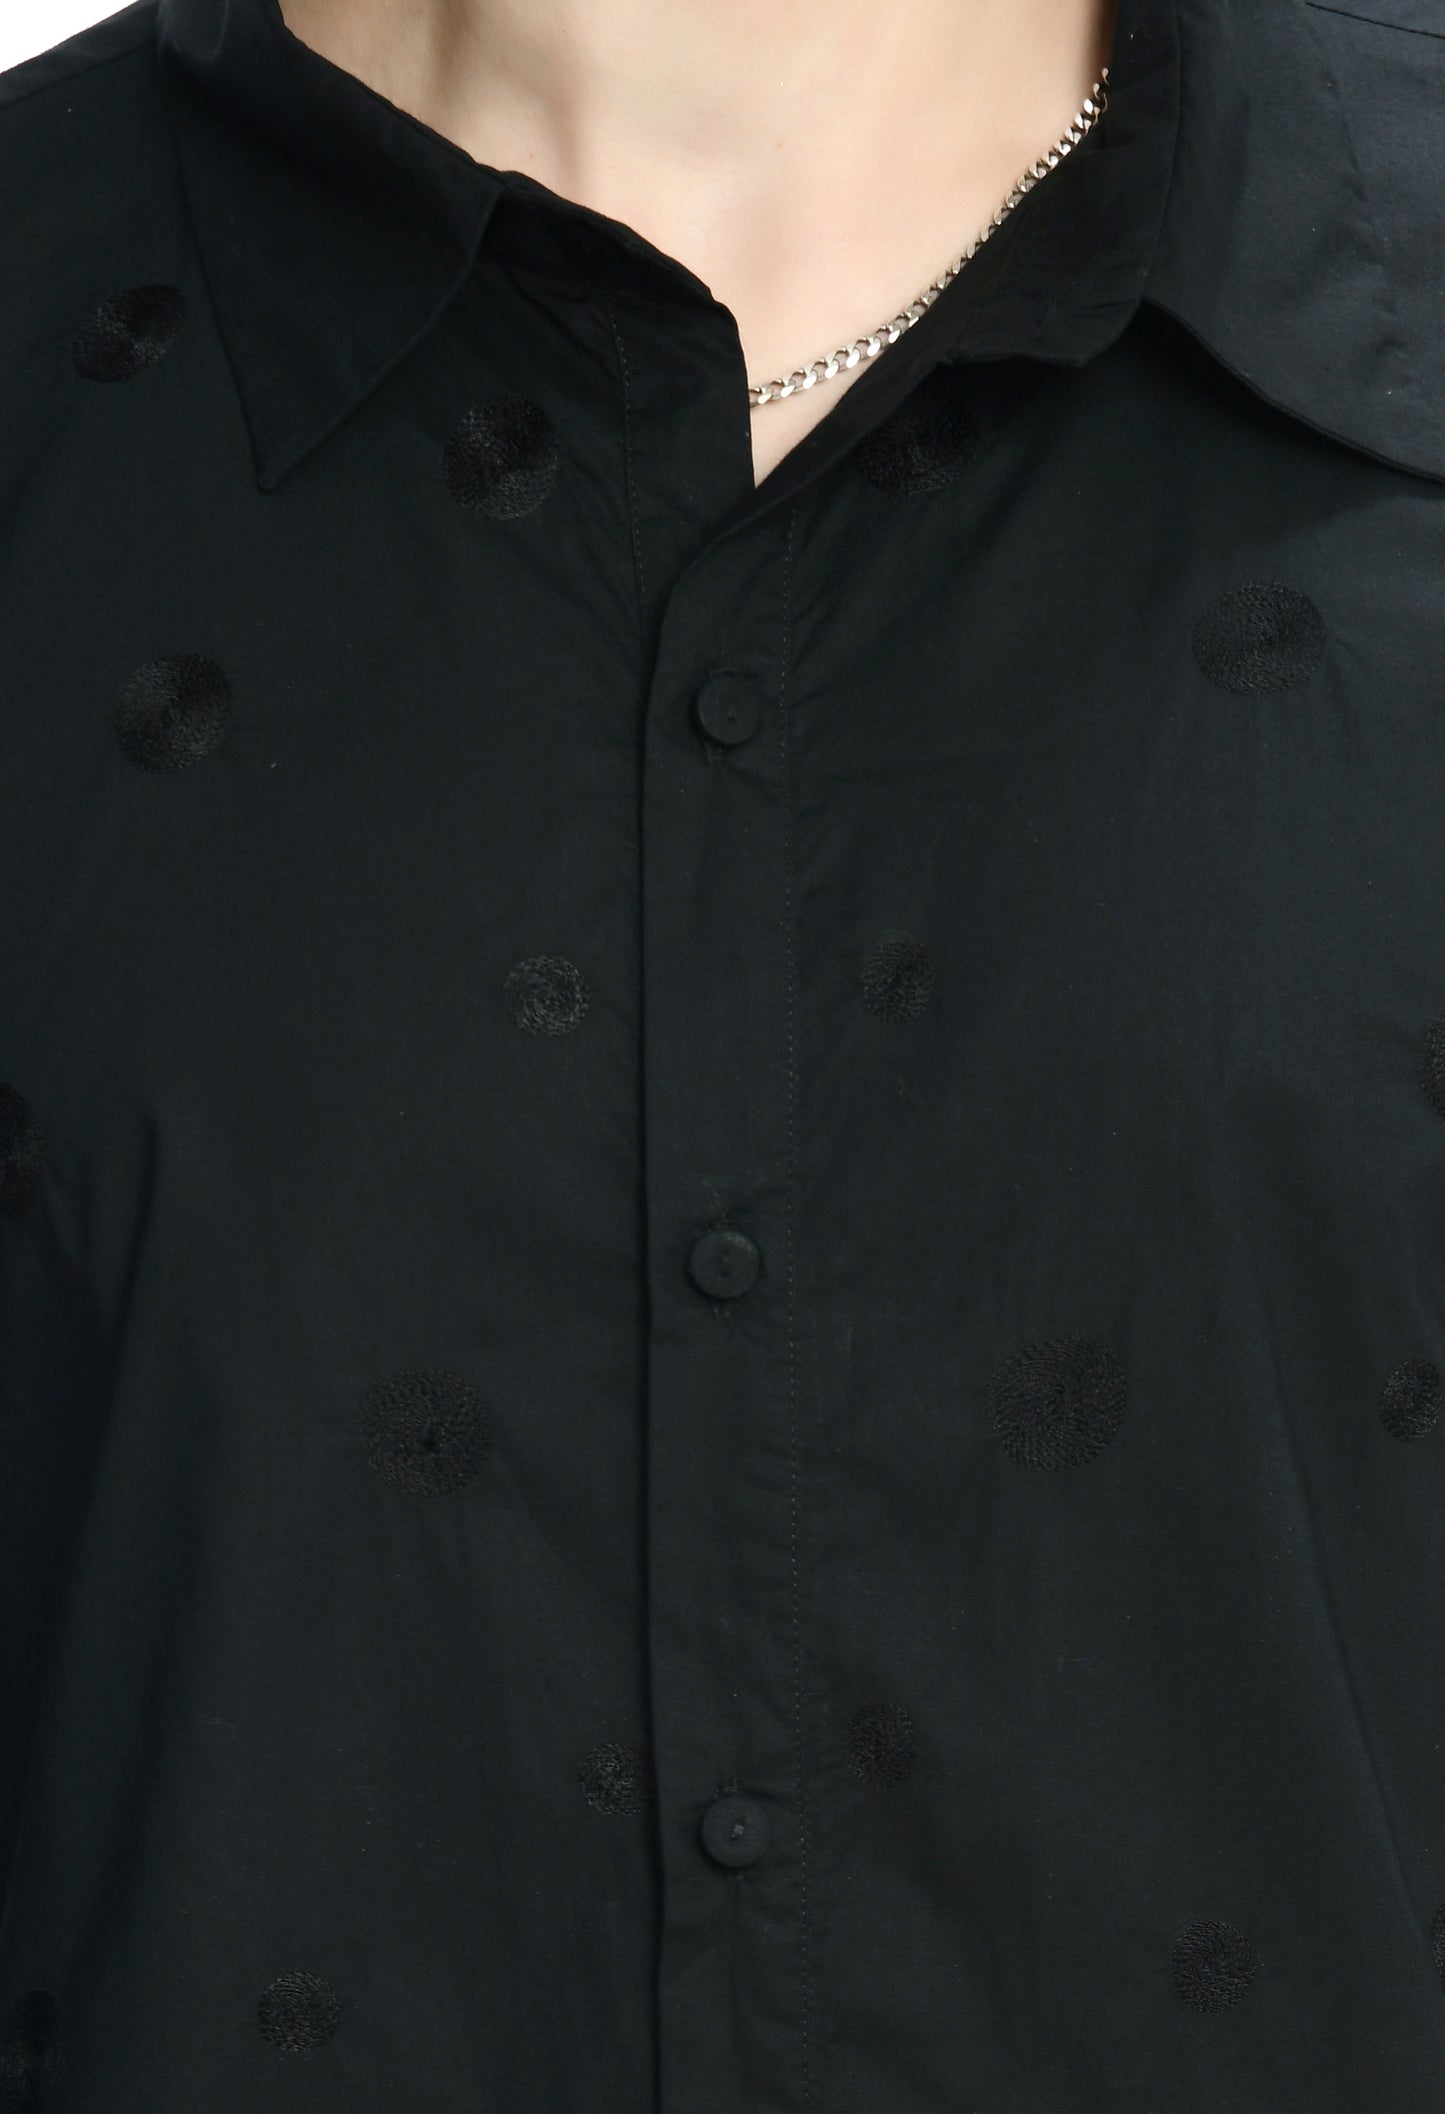 A black cotton shirt showcasing tone on tone thread embroidery